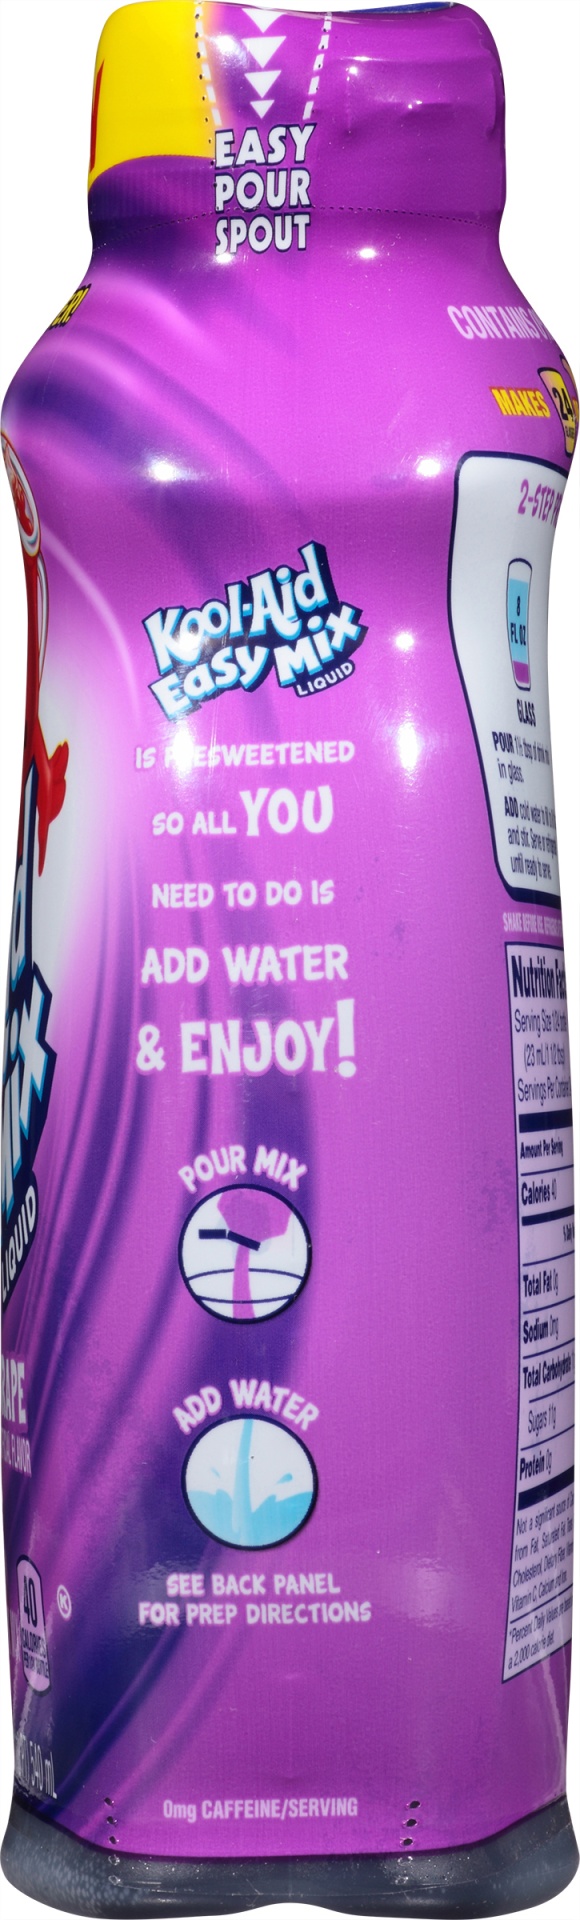 slide 5 of 8, Kool-Aid Easy Mix Liquid Grape, 18.2 fl oz